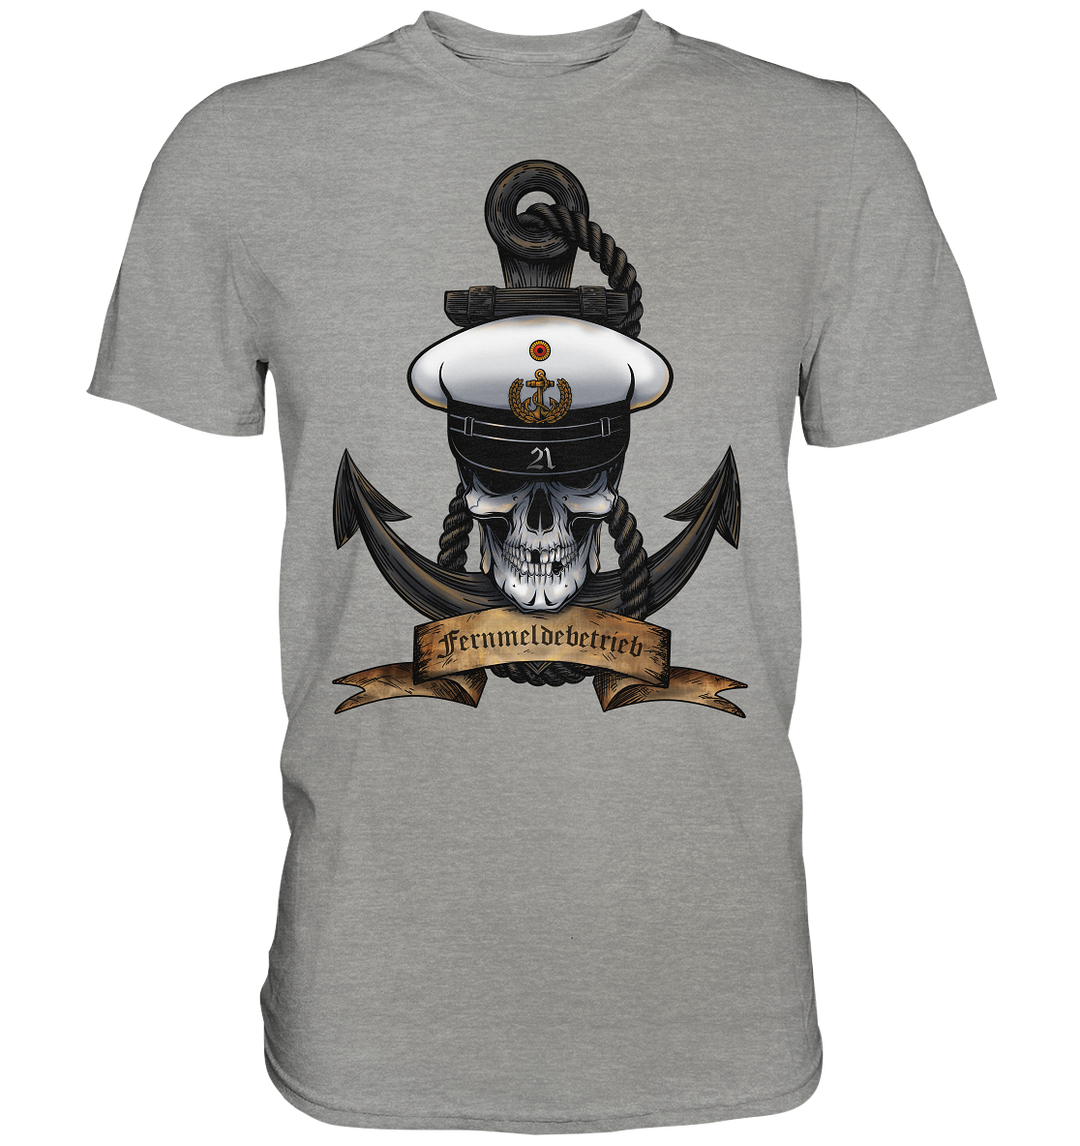 "Marine 21 - Fernmeldebetrieb" - Premium Shirt